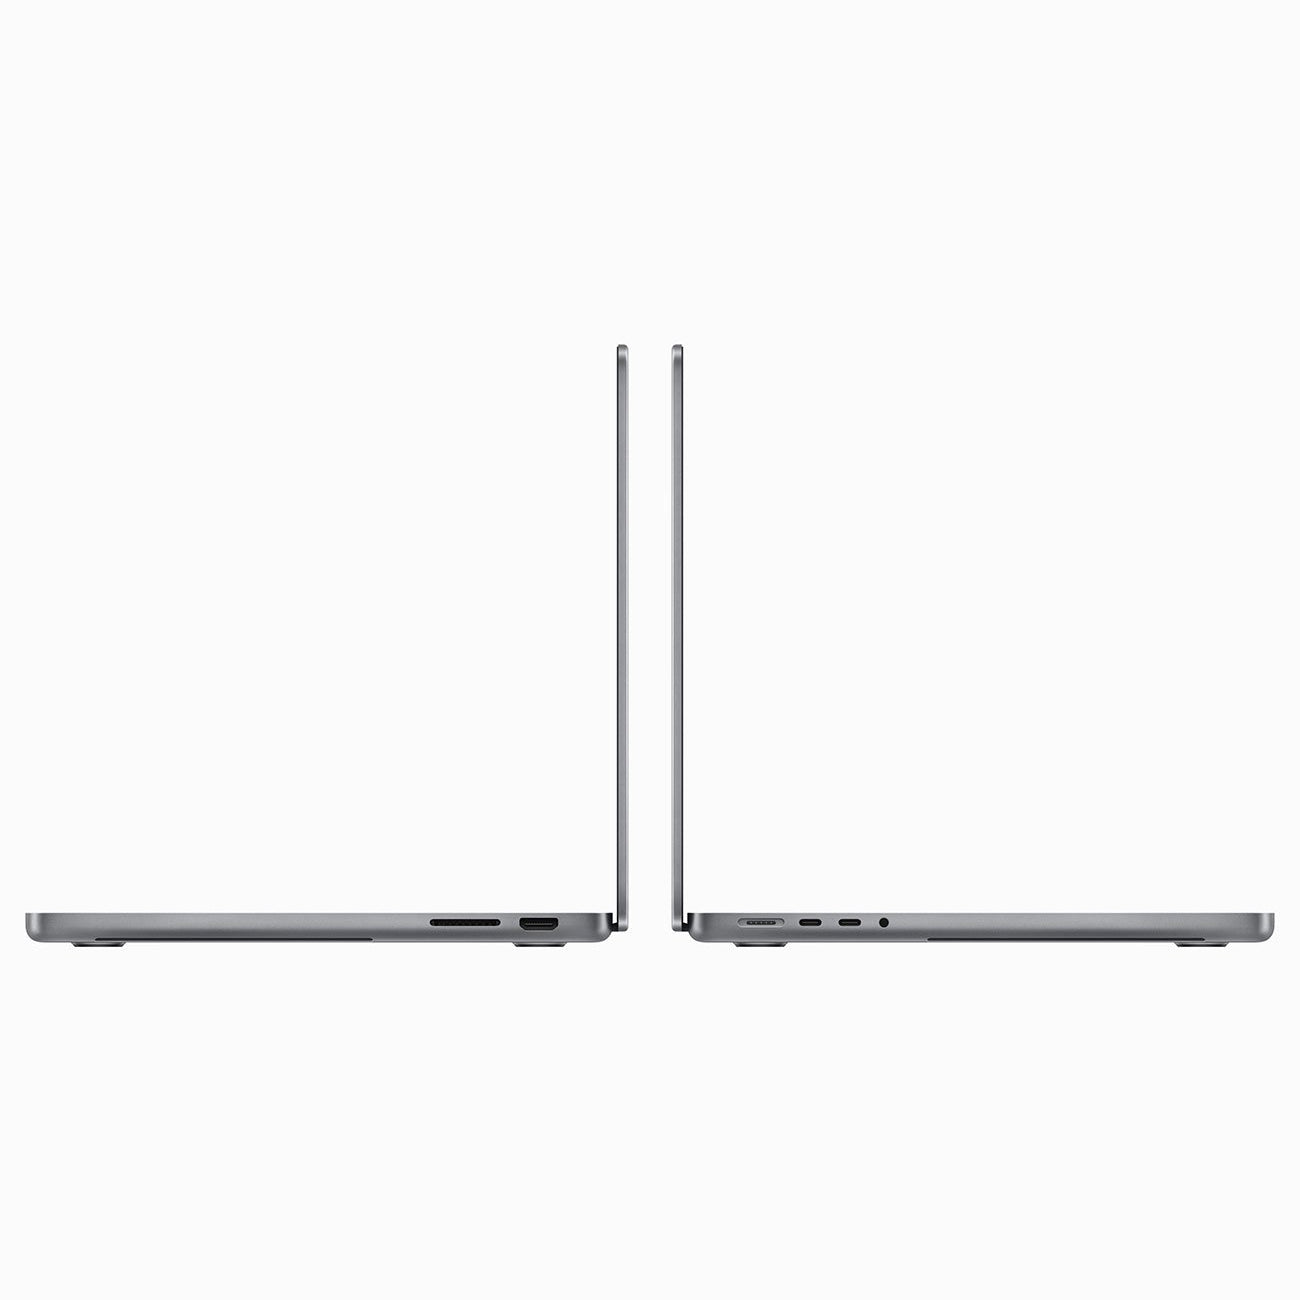 Apple Macbook Pro MTL73LL/A M3 14" Laptop (Brand New)